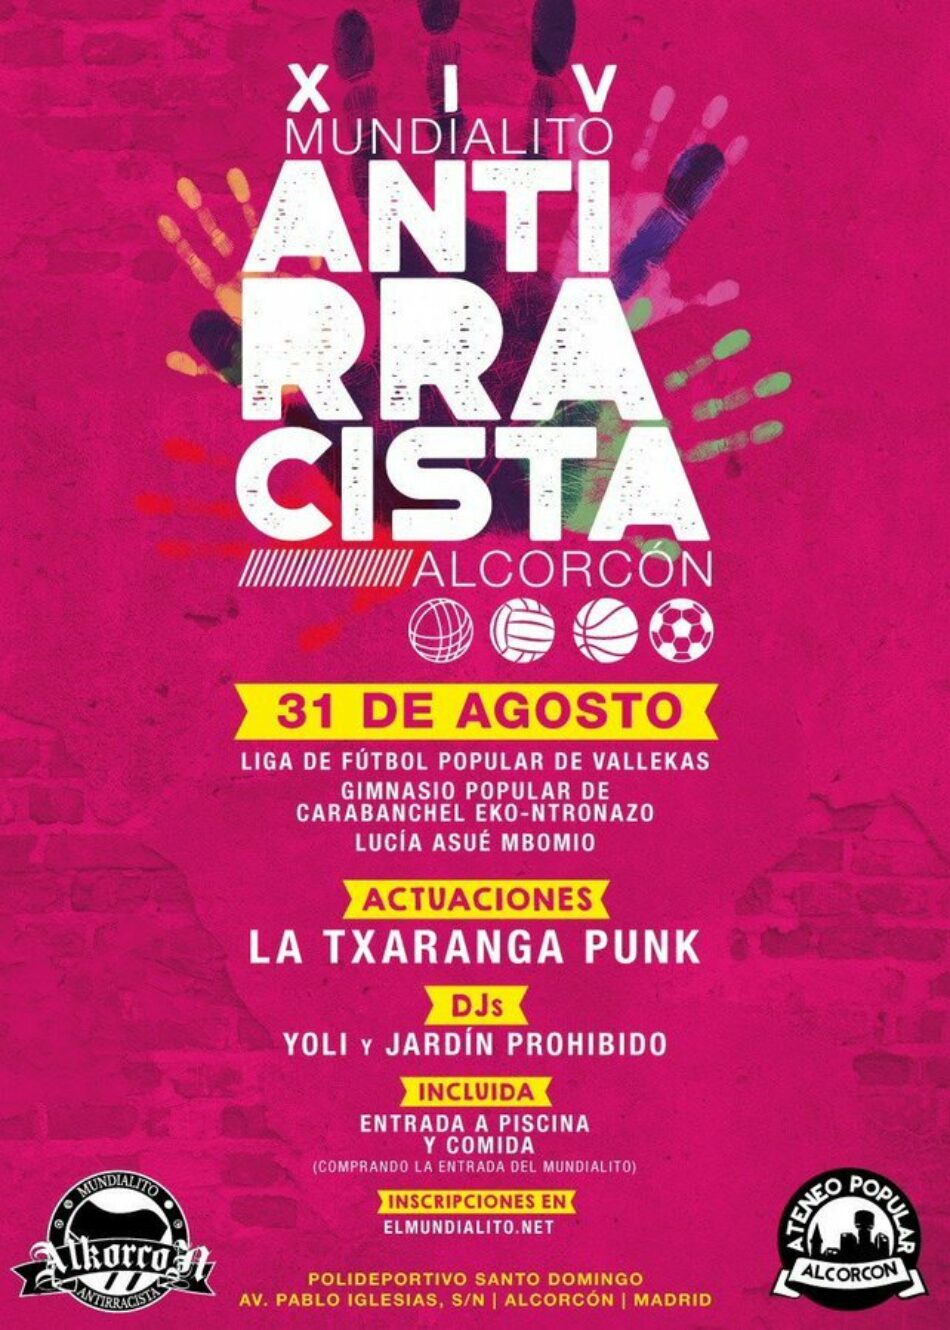 Mas de 300 personas participan el XIV Mundialito Antiracista de Alcorcón